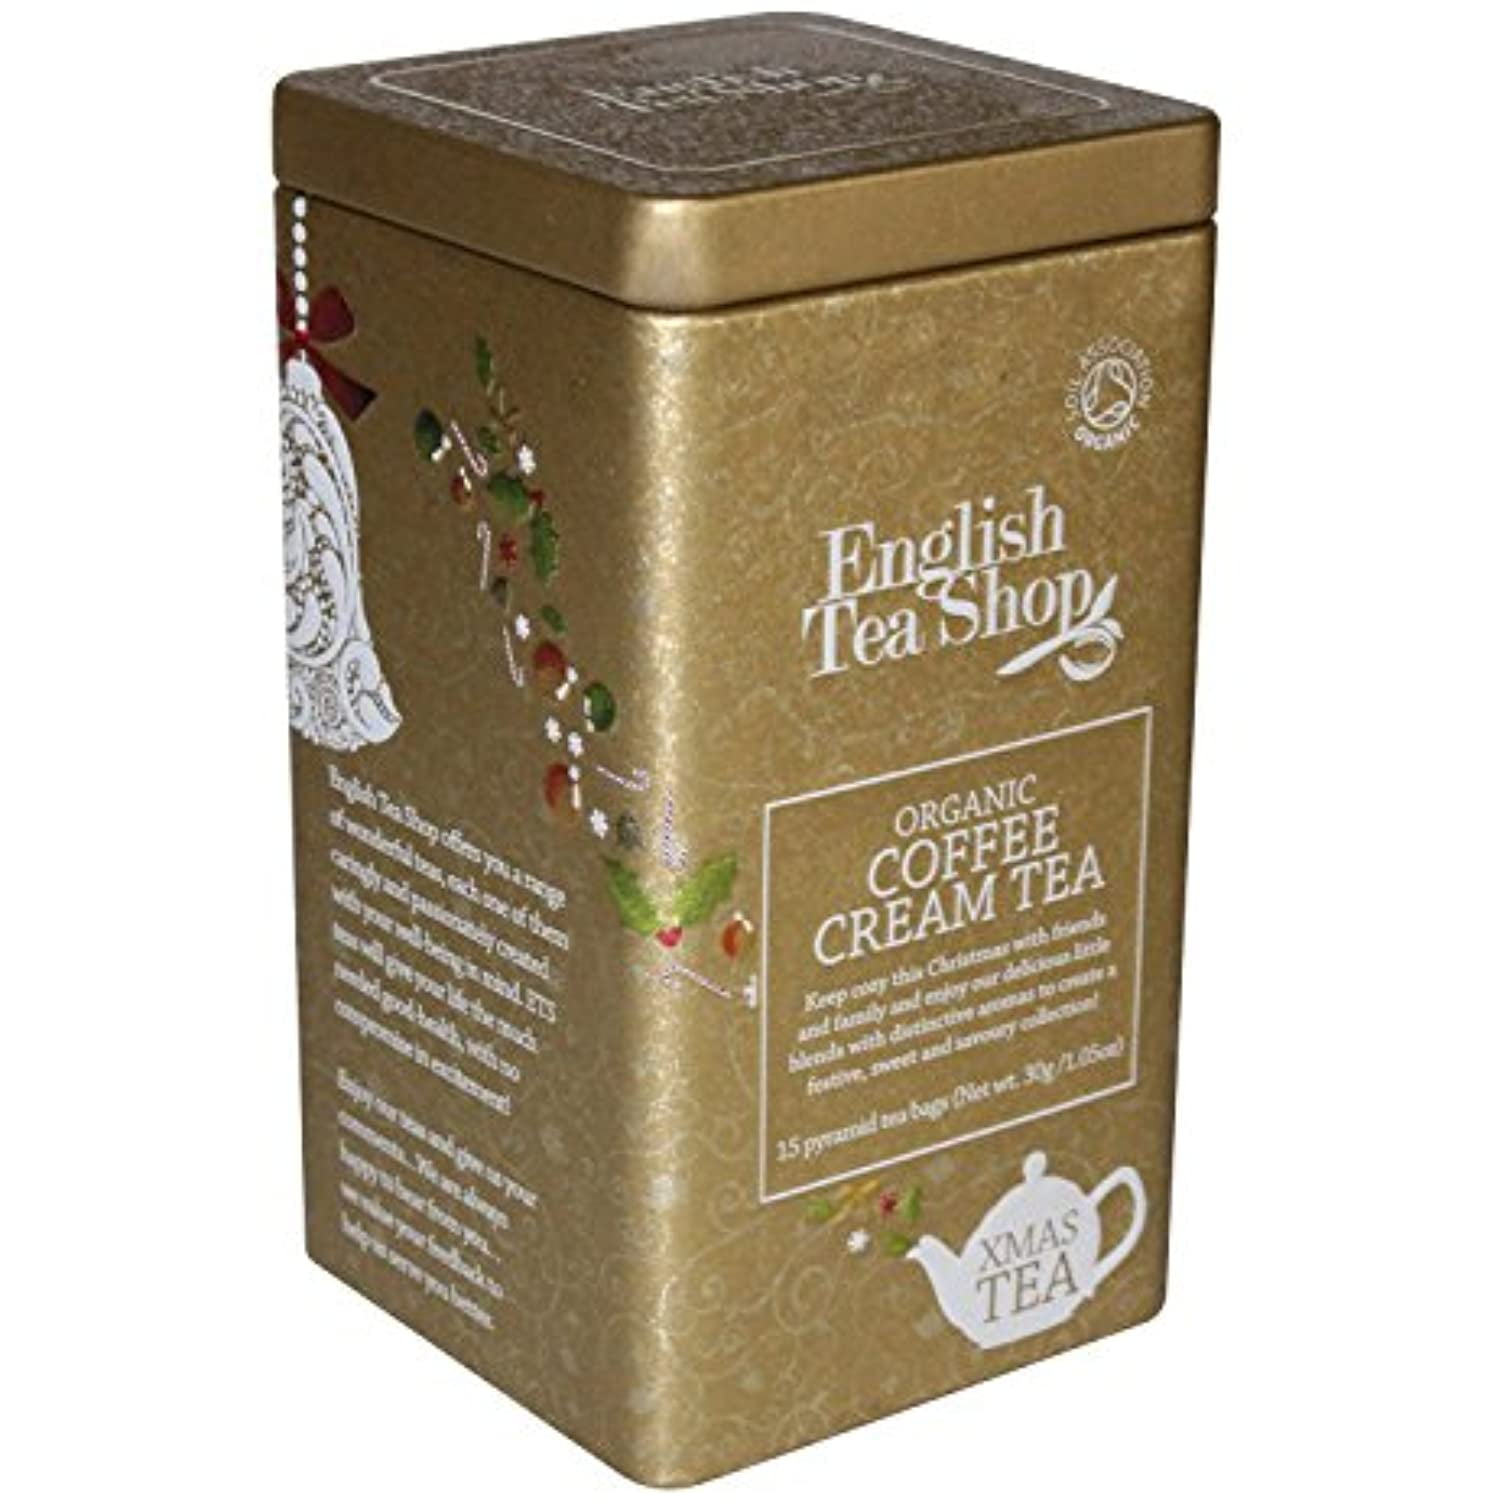 English Tea Shop Collection Pyramid, White Tea, 24 Gram